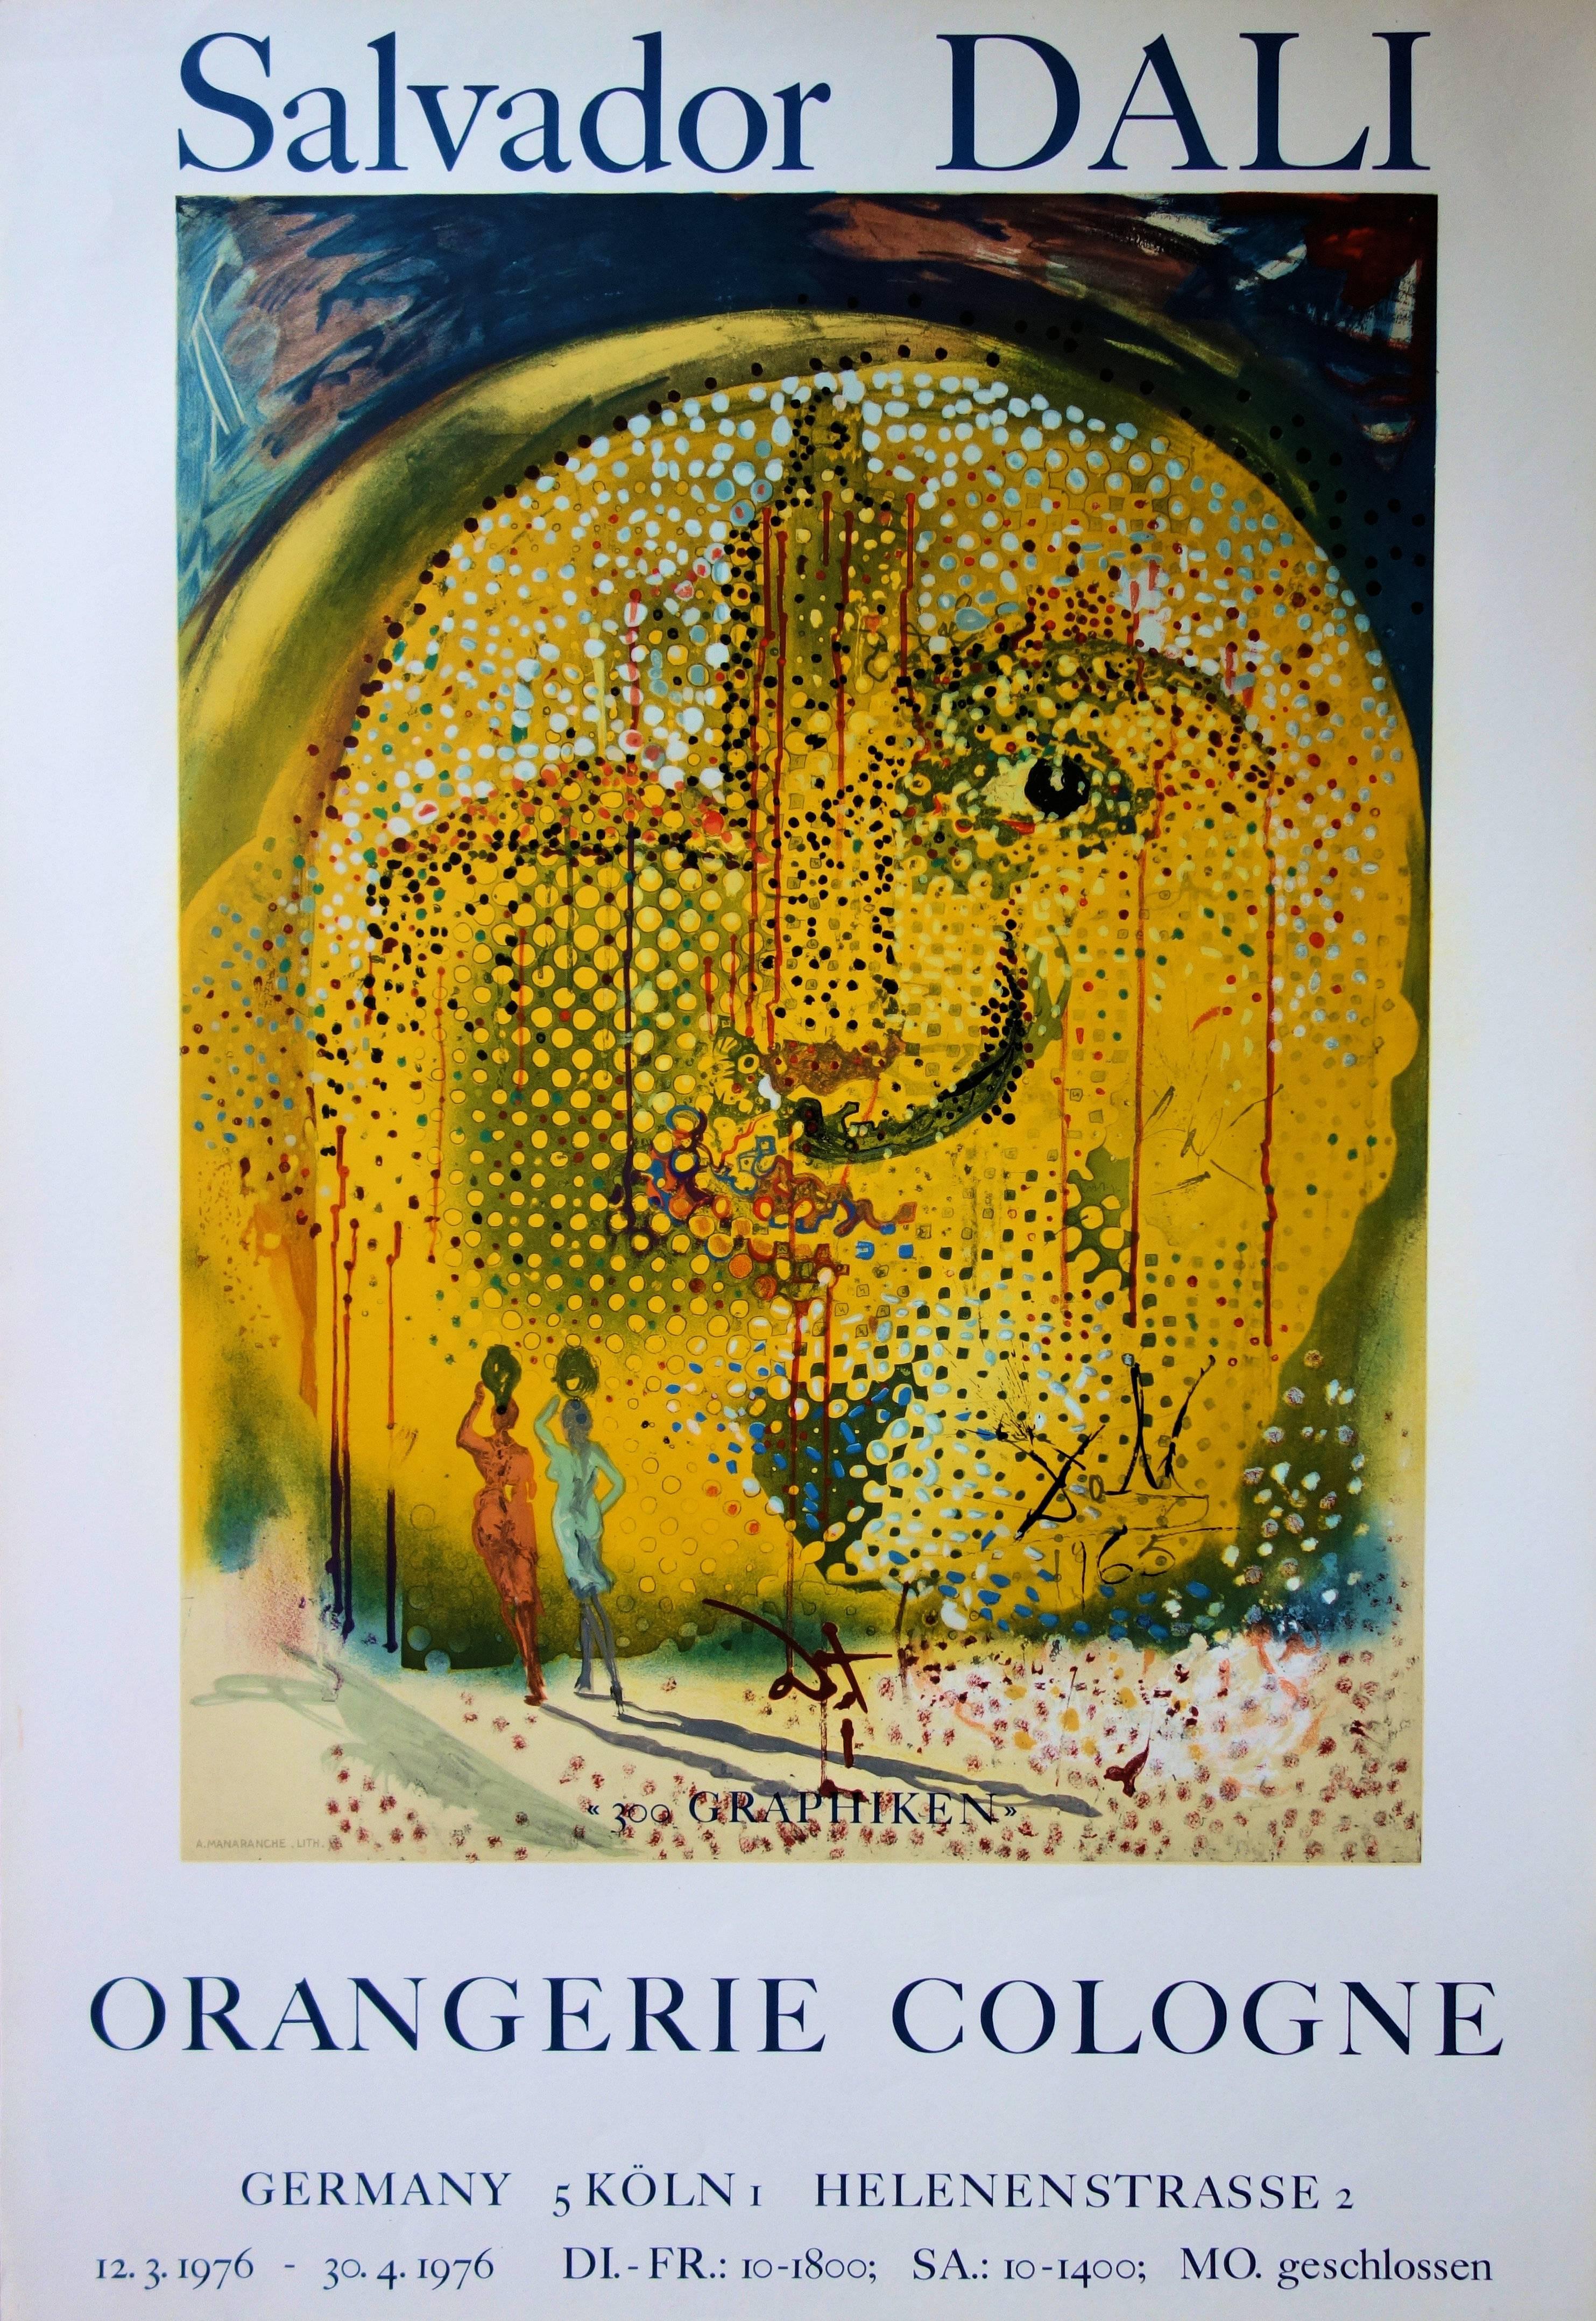 (after) Salvador Dali Figurative Print - Sol y Dali - Rare Vintage Lithograph Poster - Mourlot 1967 (Field #67-1)